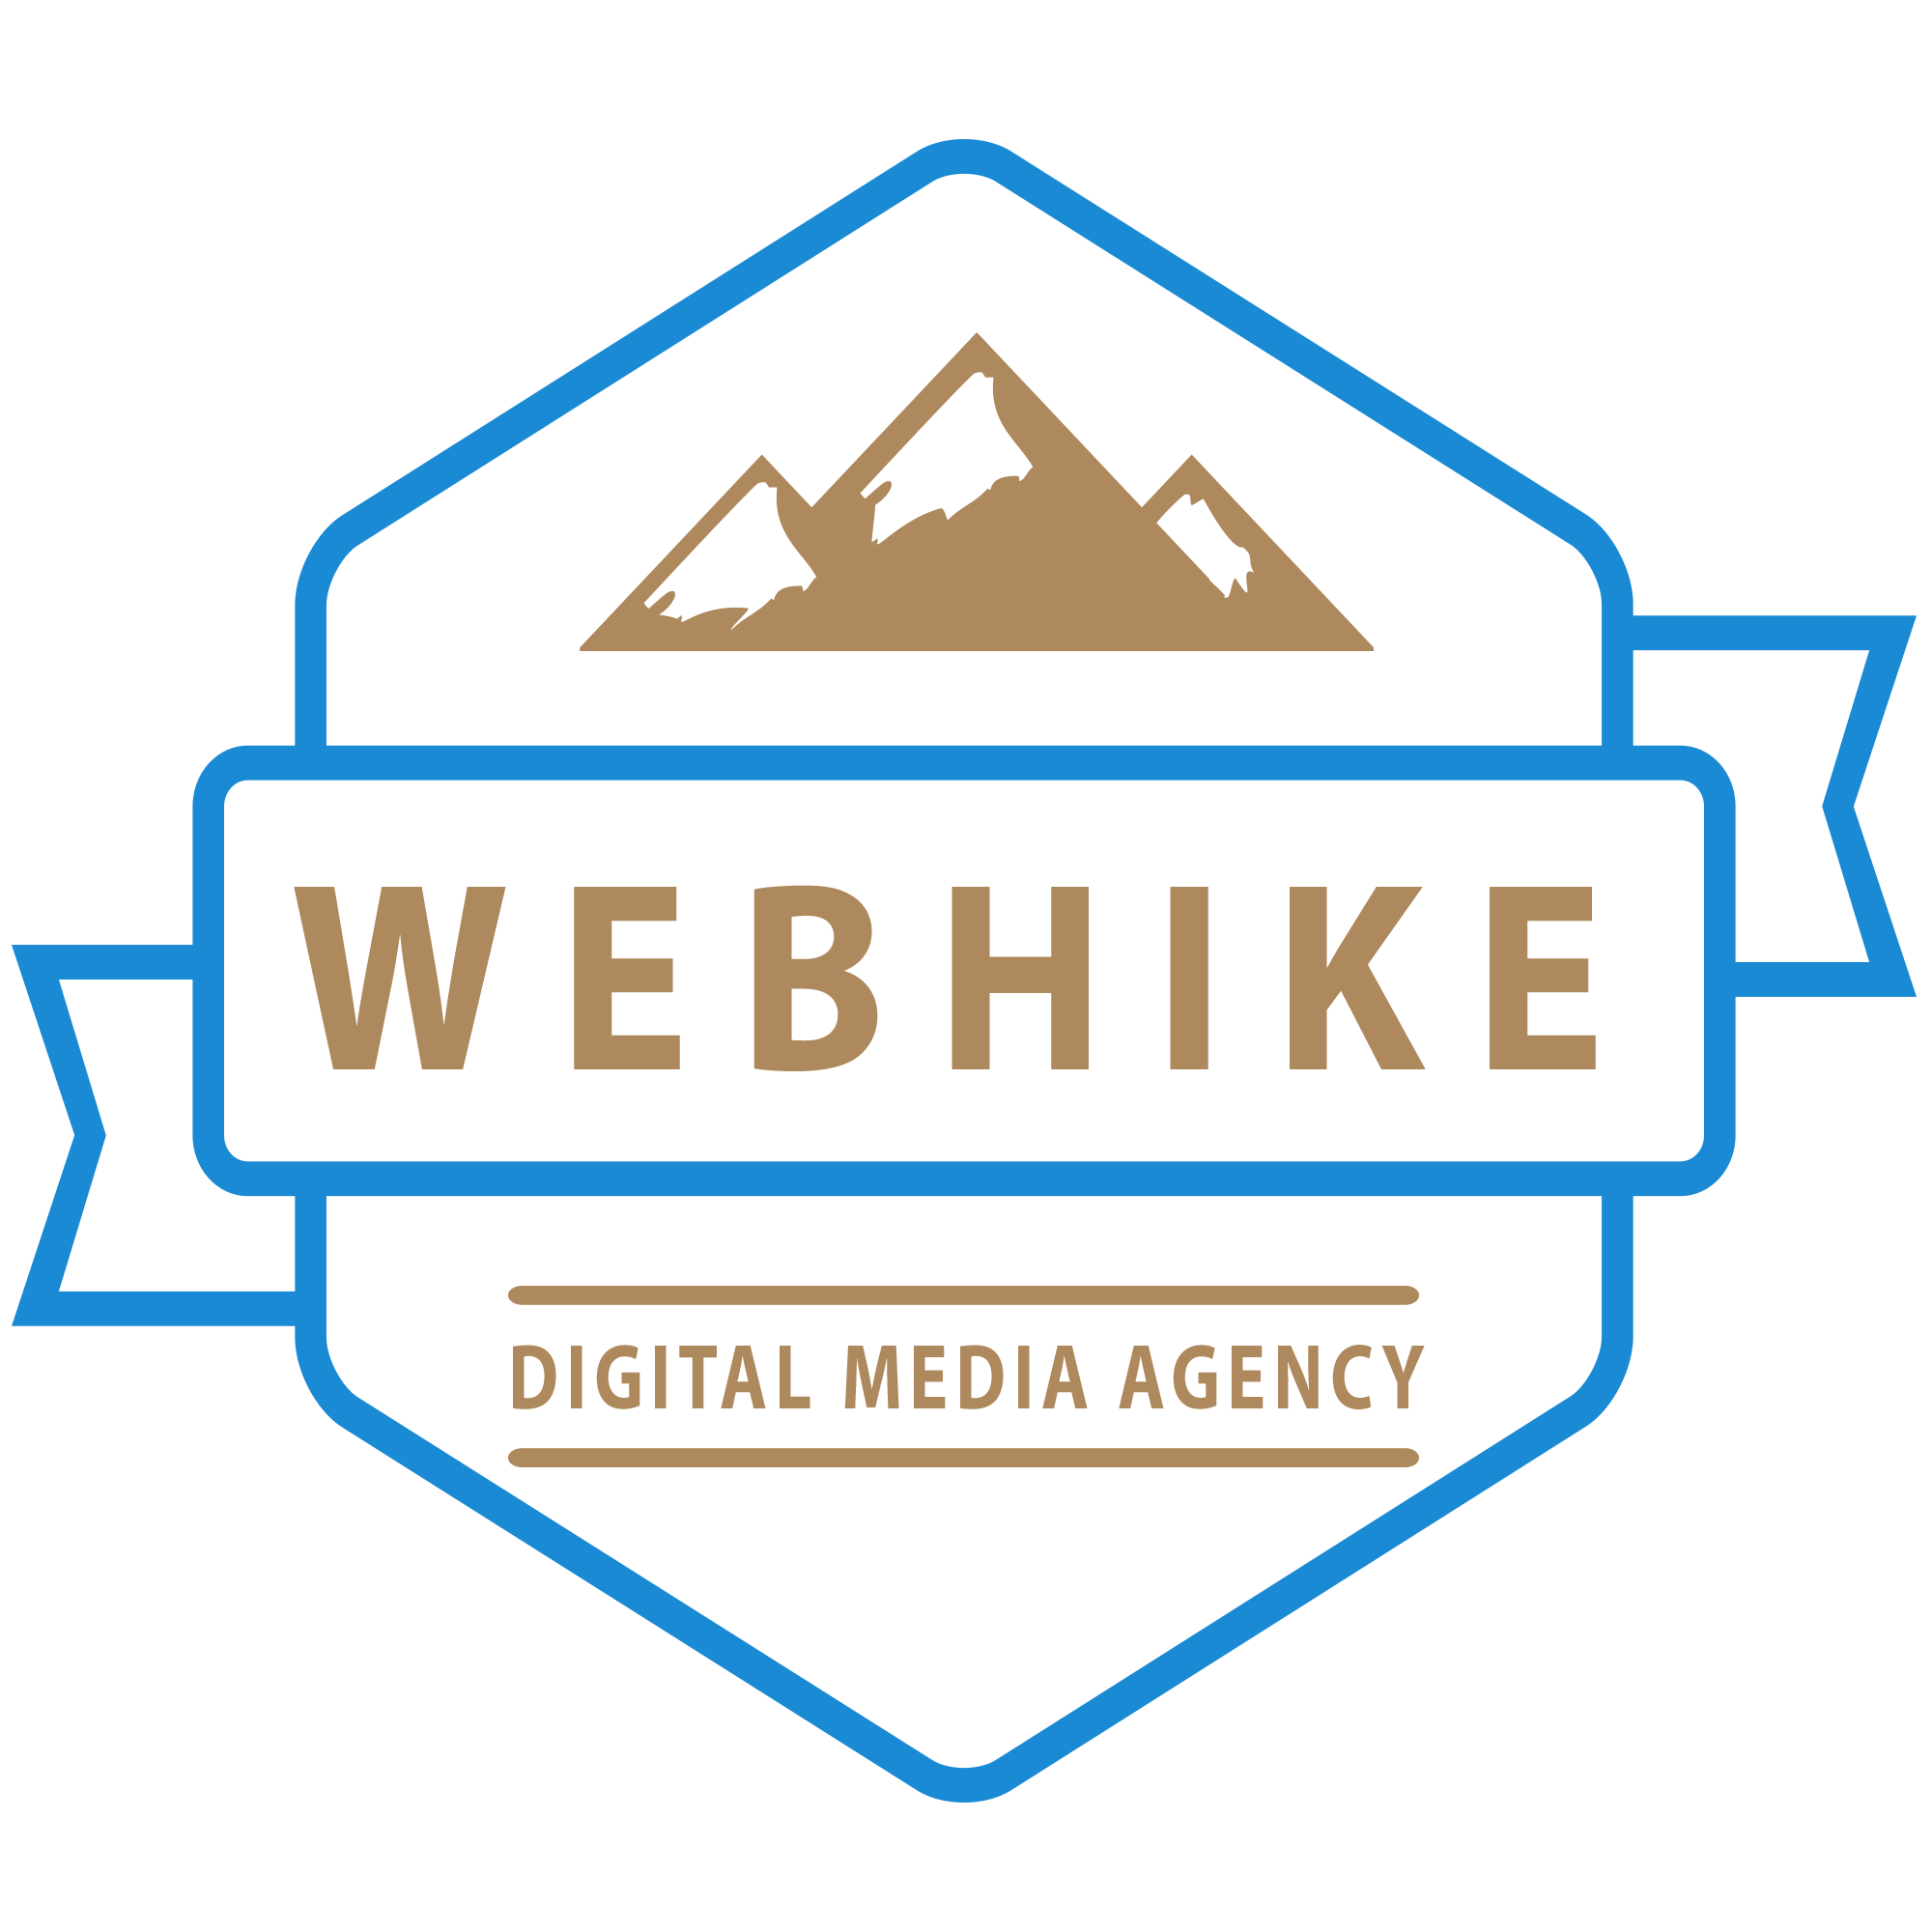 WEBHIKE LOGO | Digital media agency UK